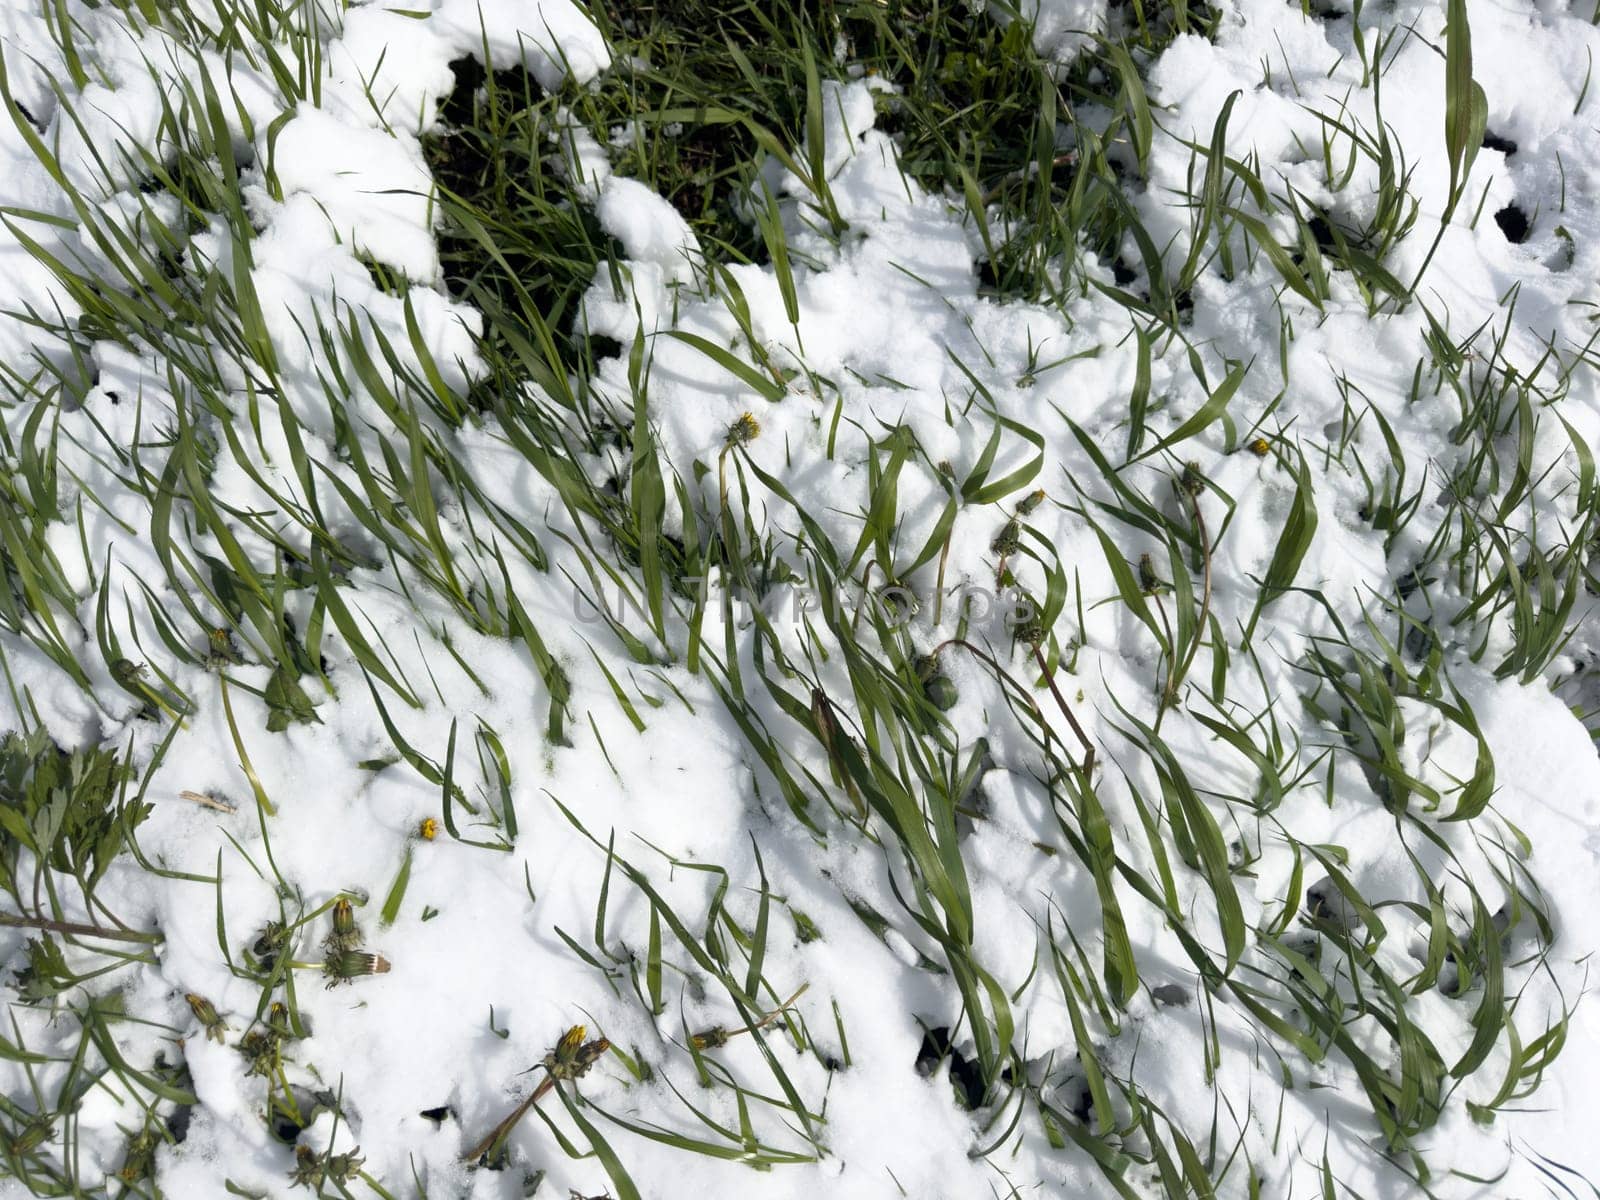 white snow lies on green grass in spring outside by Igorsmirnof